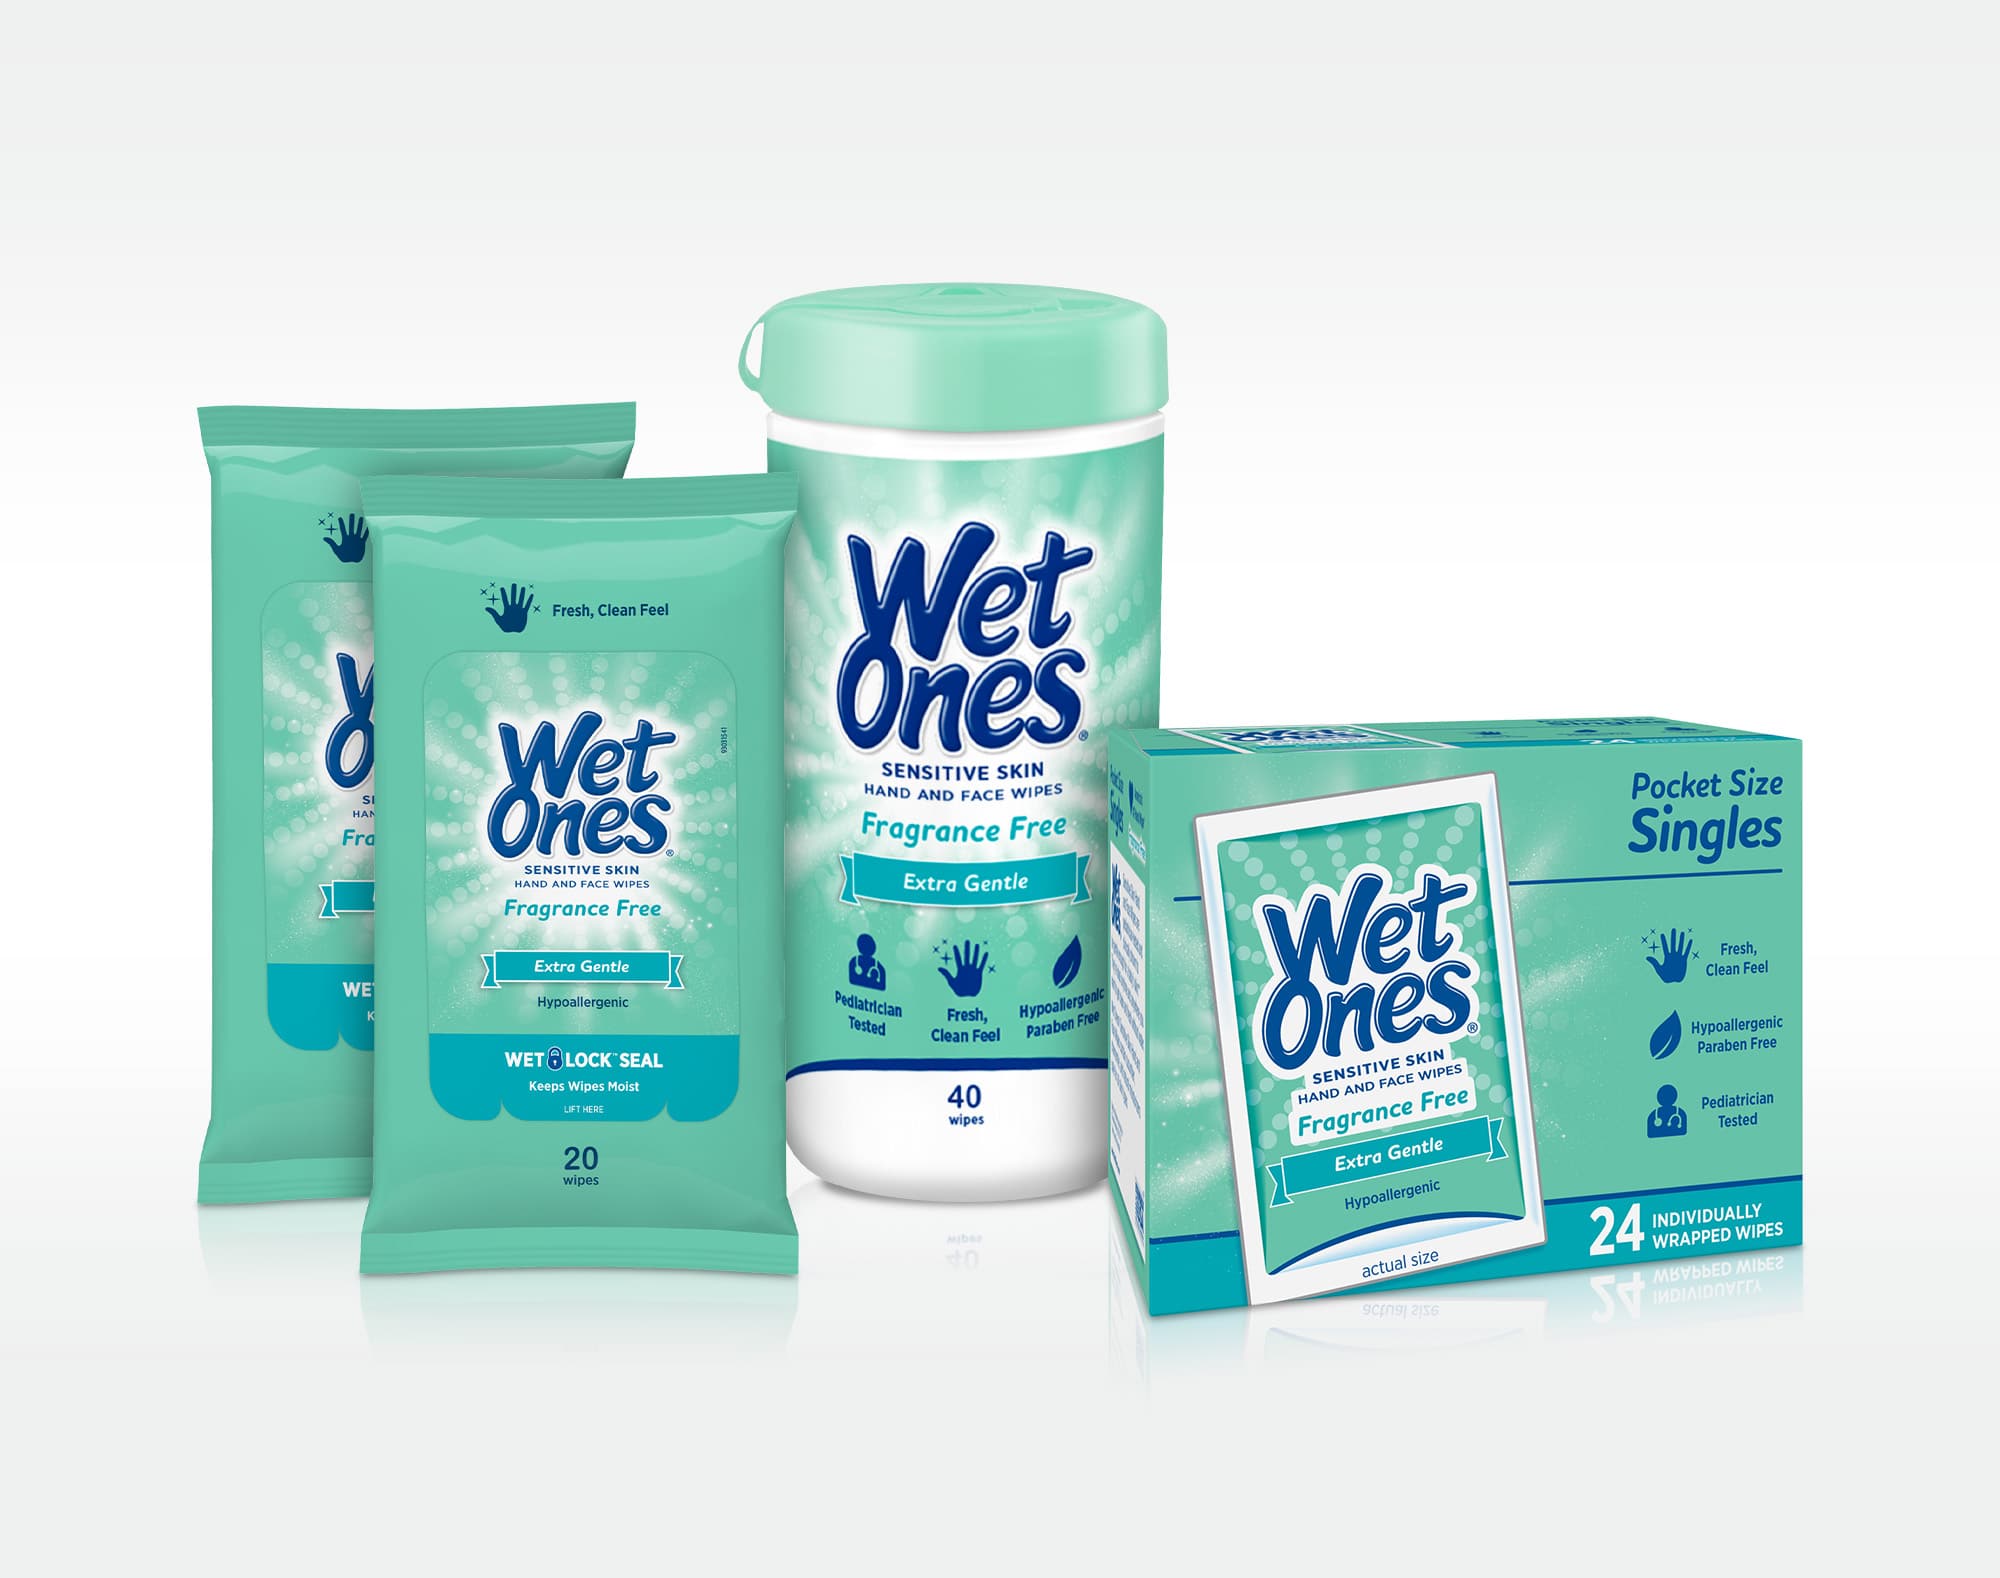 Wet Ones Antibacterial Hand Wipes, Fresh Scent/Lavender (20 ct., 7